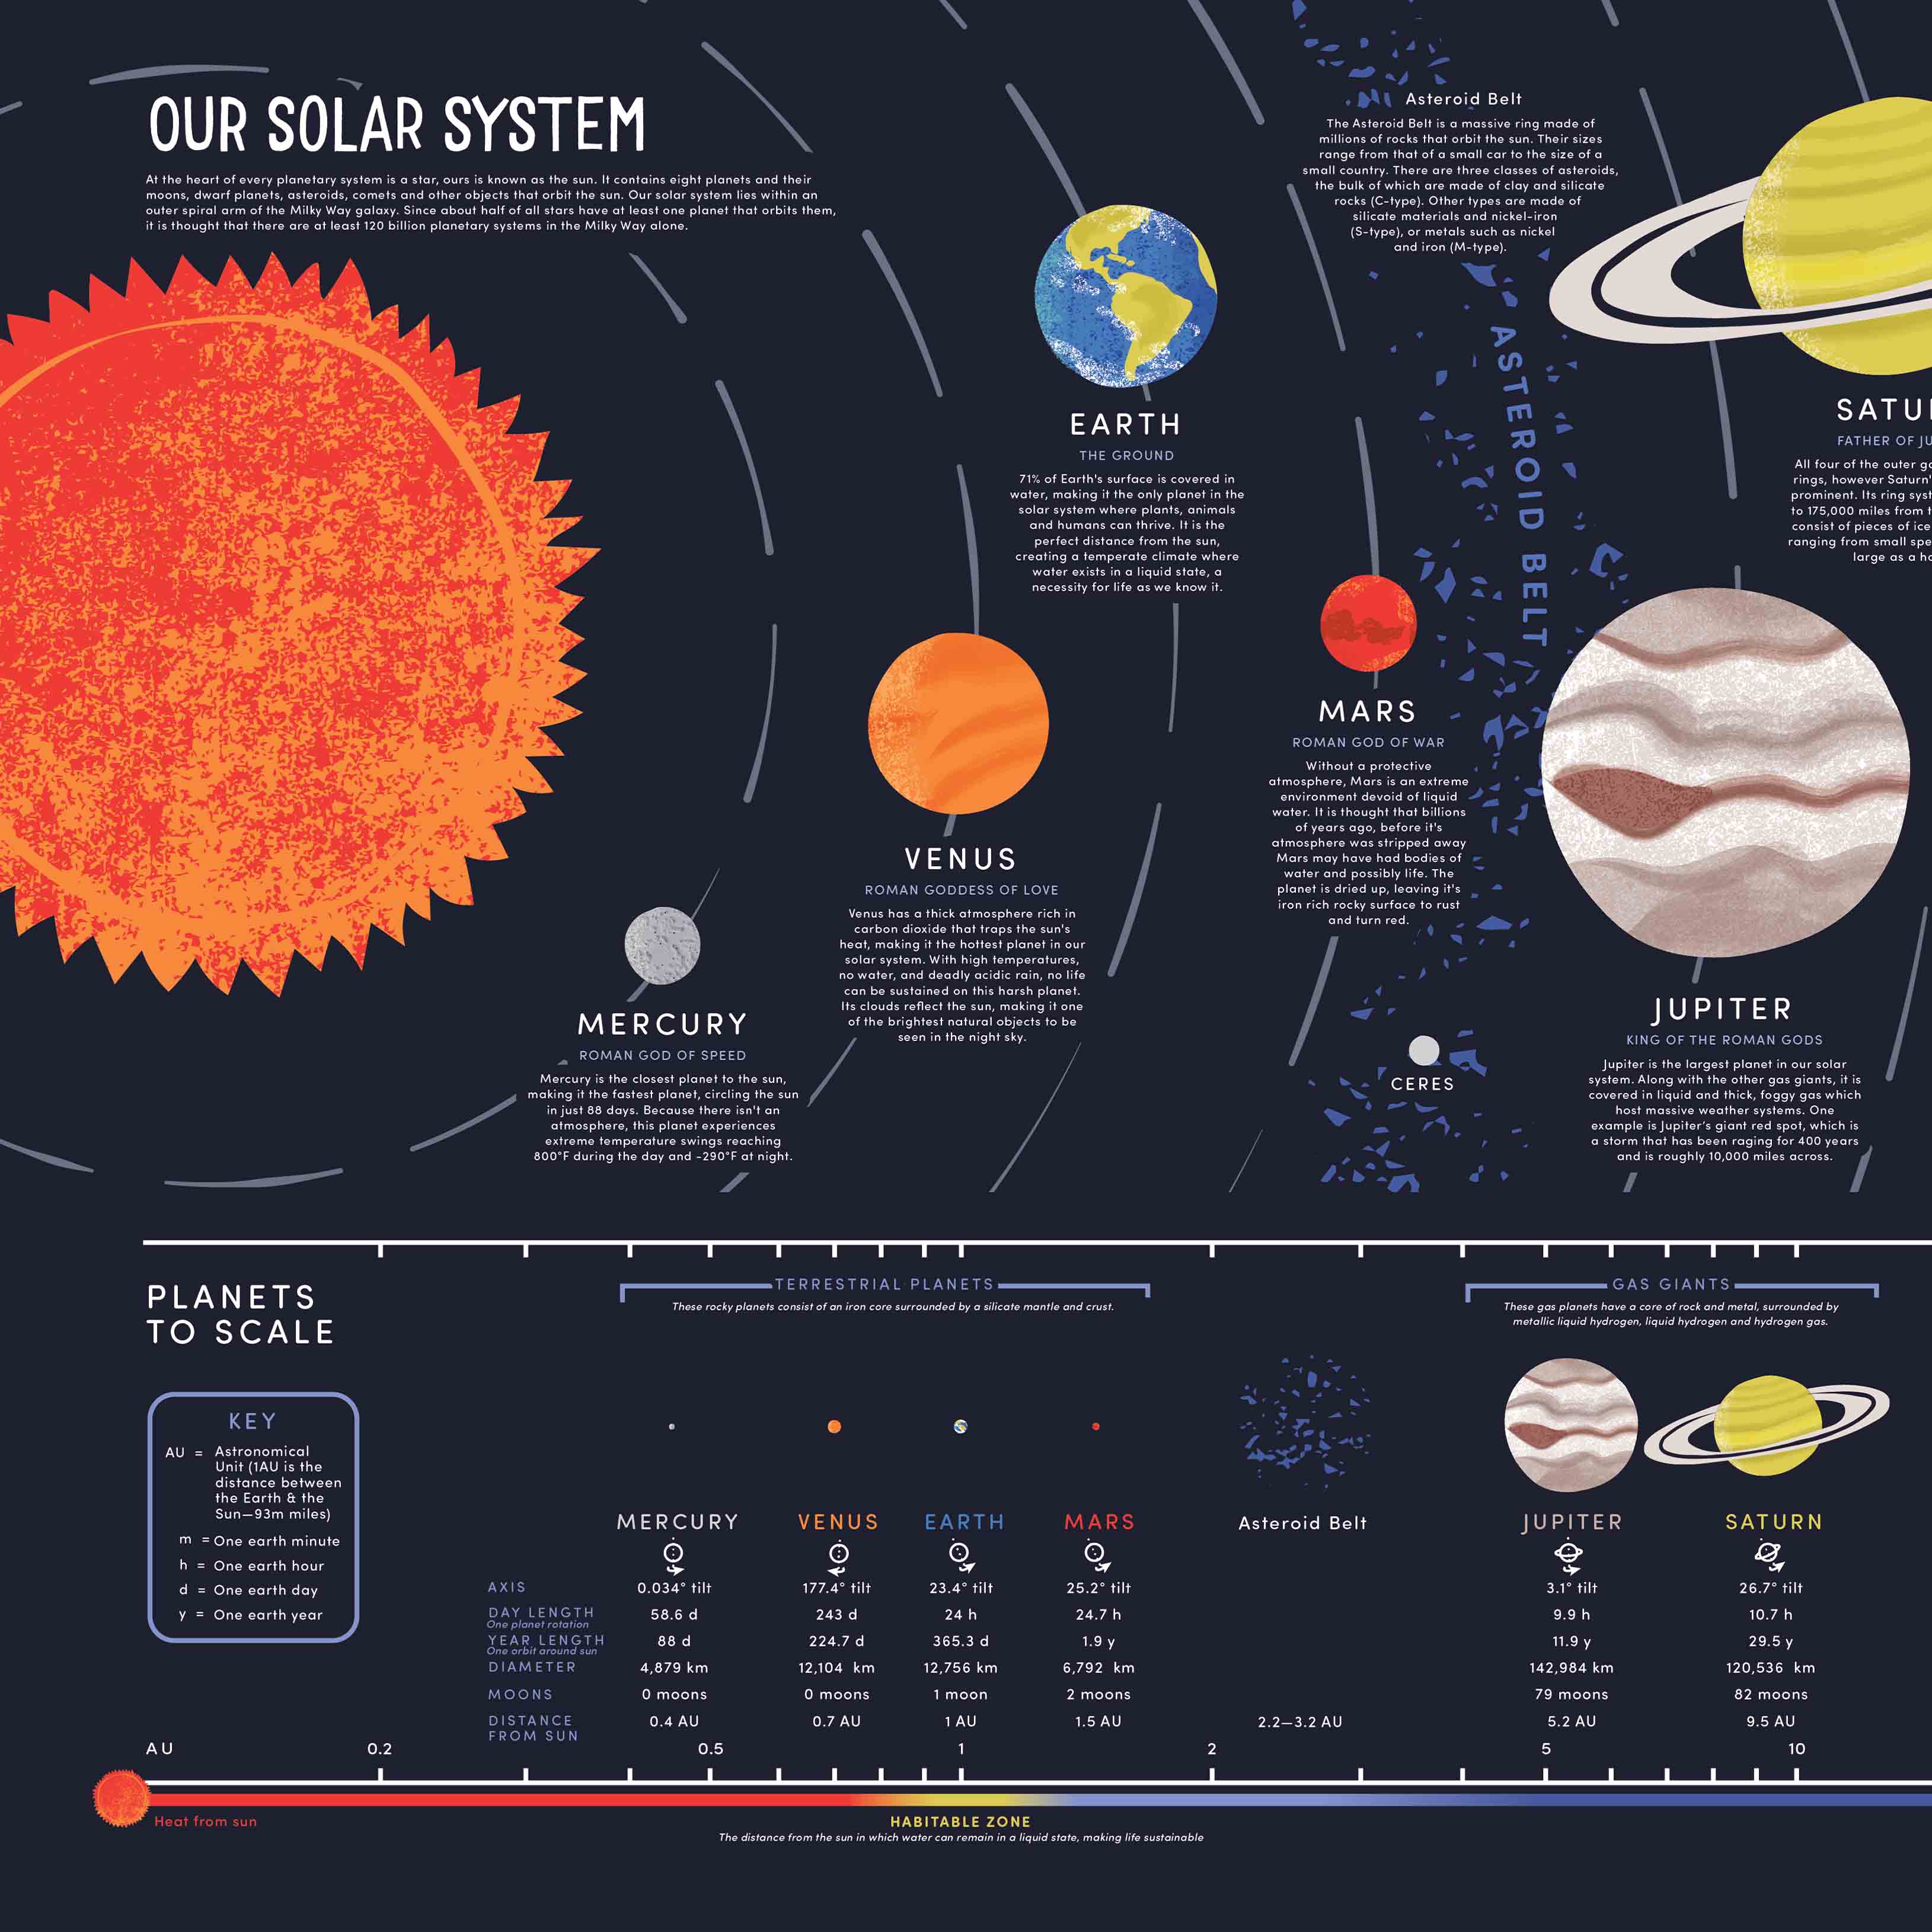 planets solar system diagram 4 dimensions